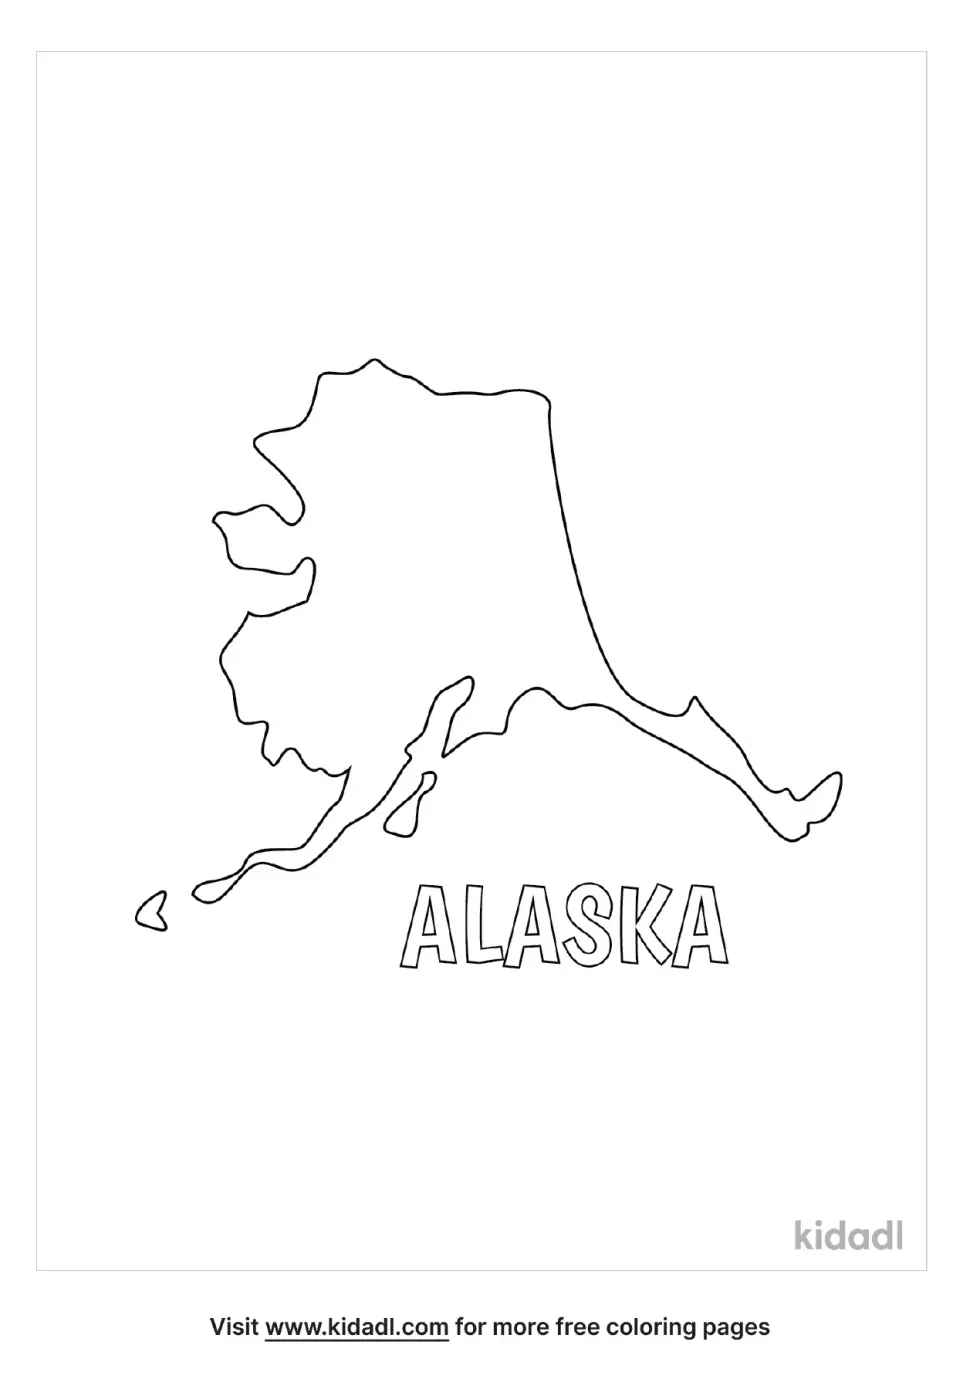 Alaska State | Kidadl